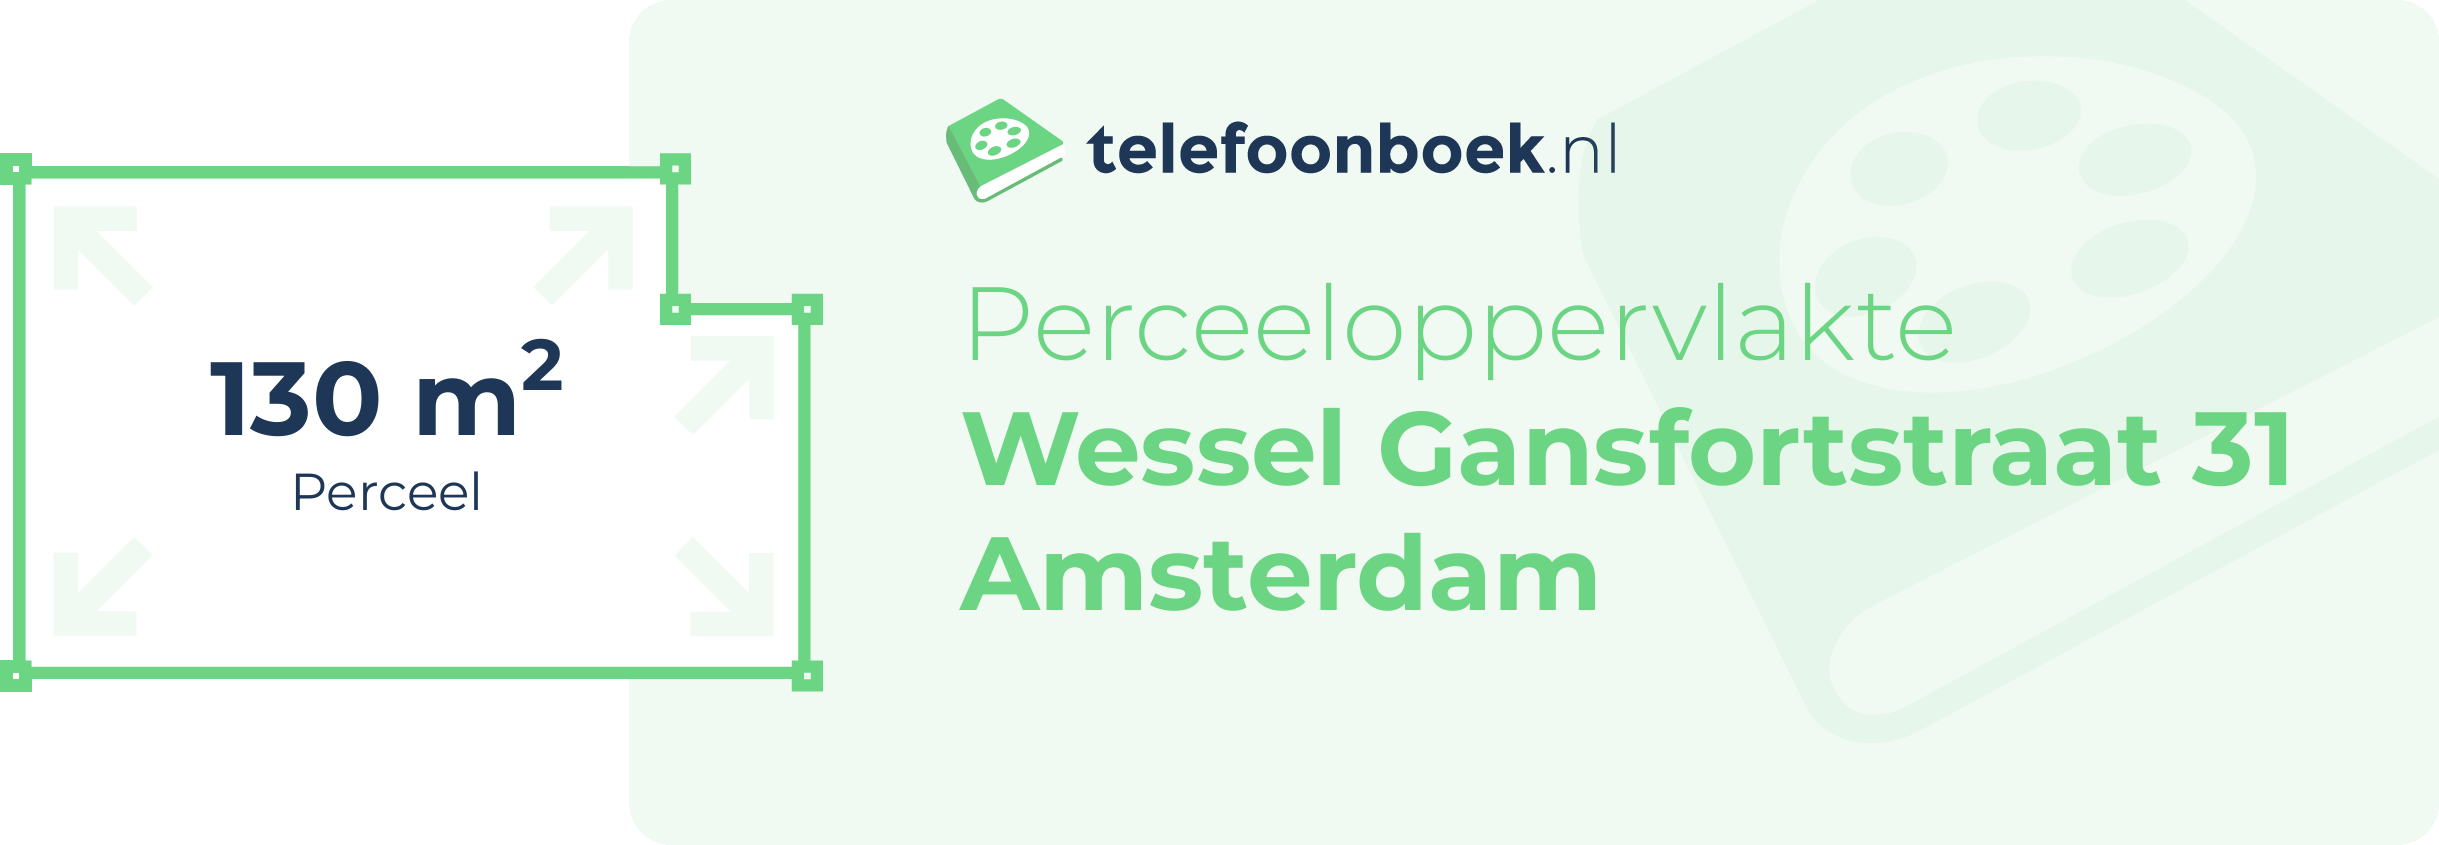 Perceeloppervlakte Wessel Gansfortstraat 31 Amsterdam